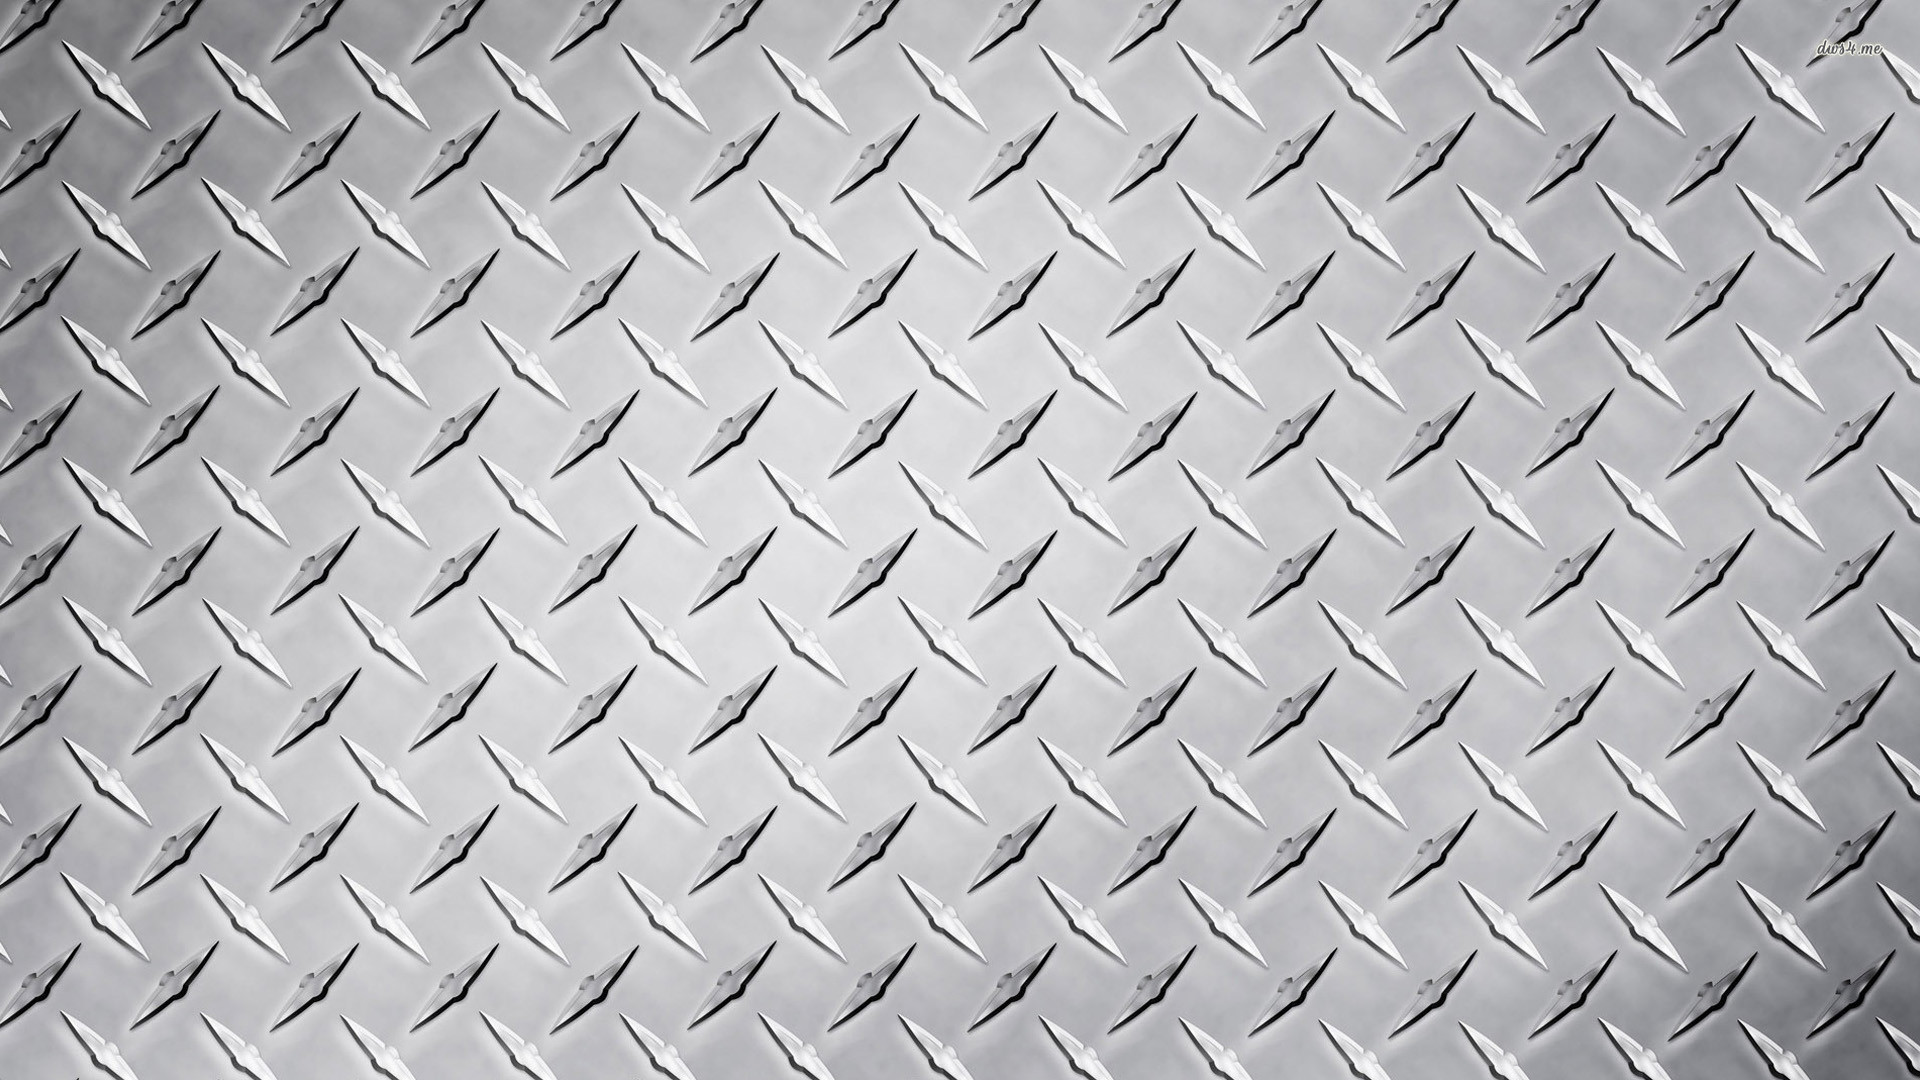 Silver Diamond Plate wallpaper https://deskbg.com/view/30525/